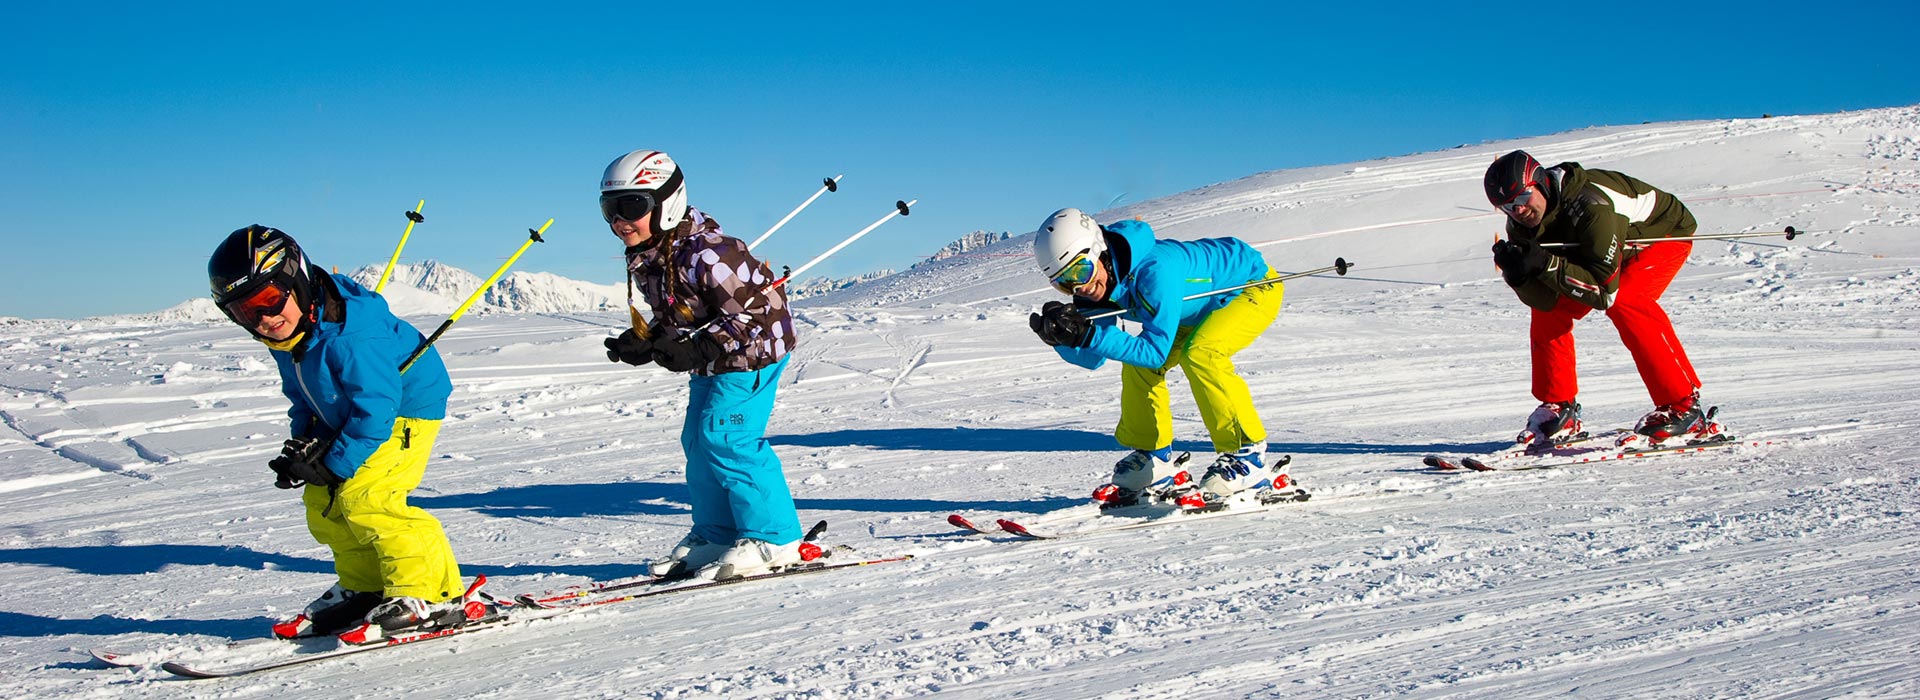 Familie Winter Skifahren